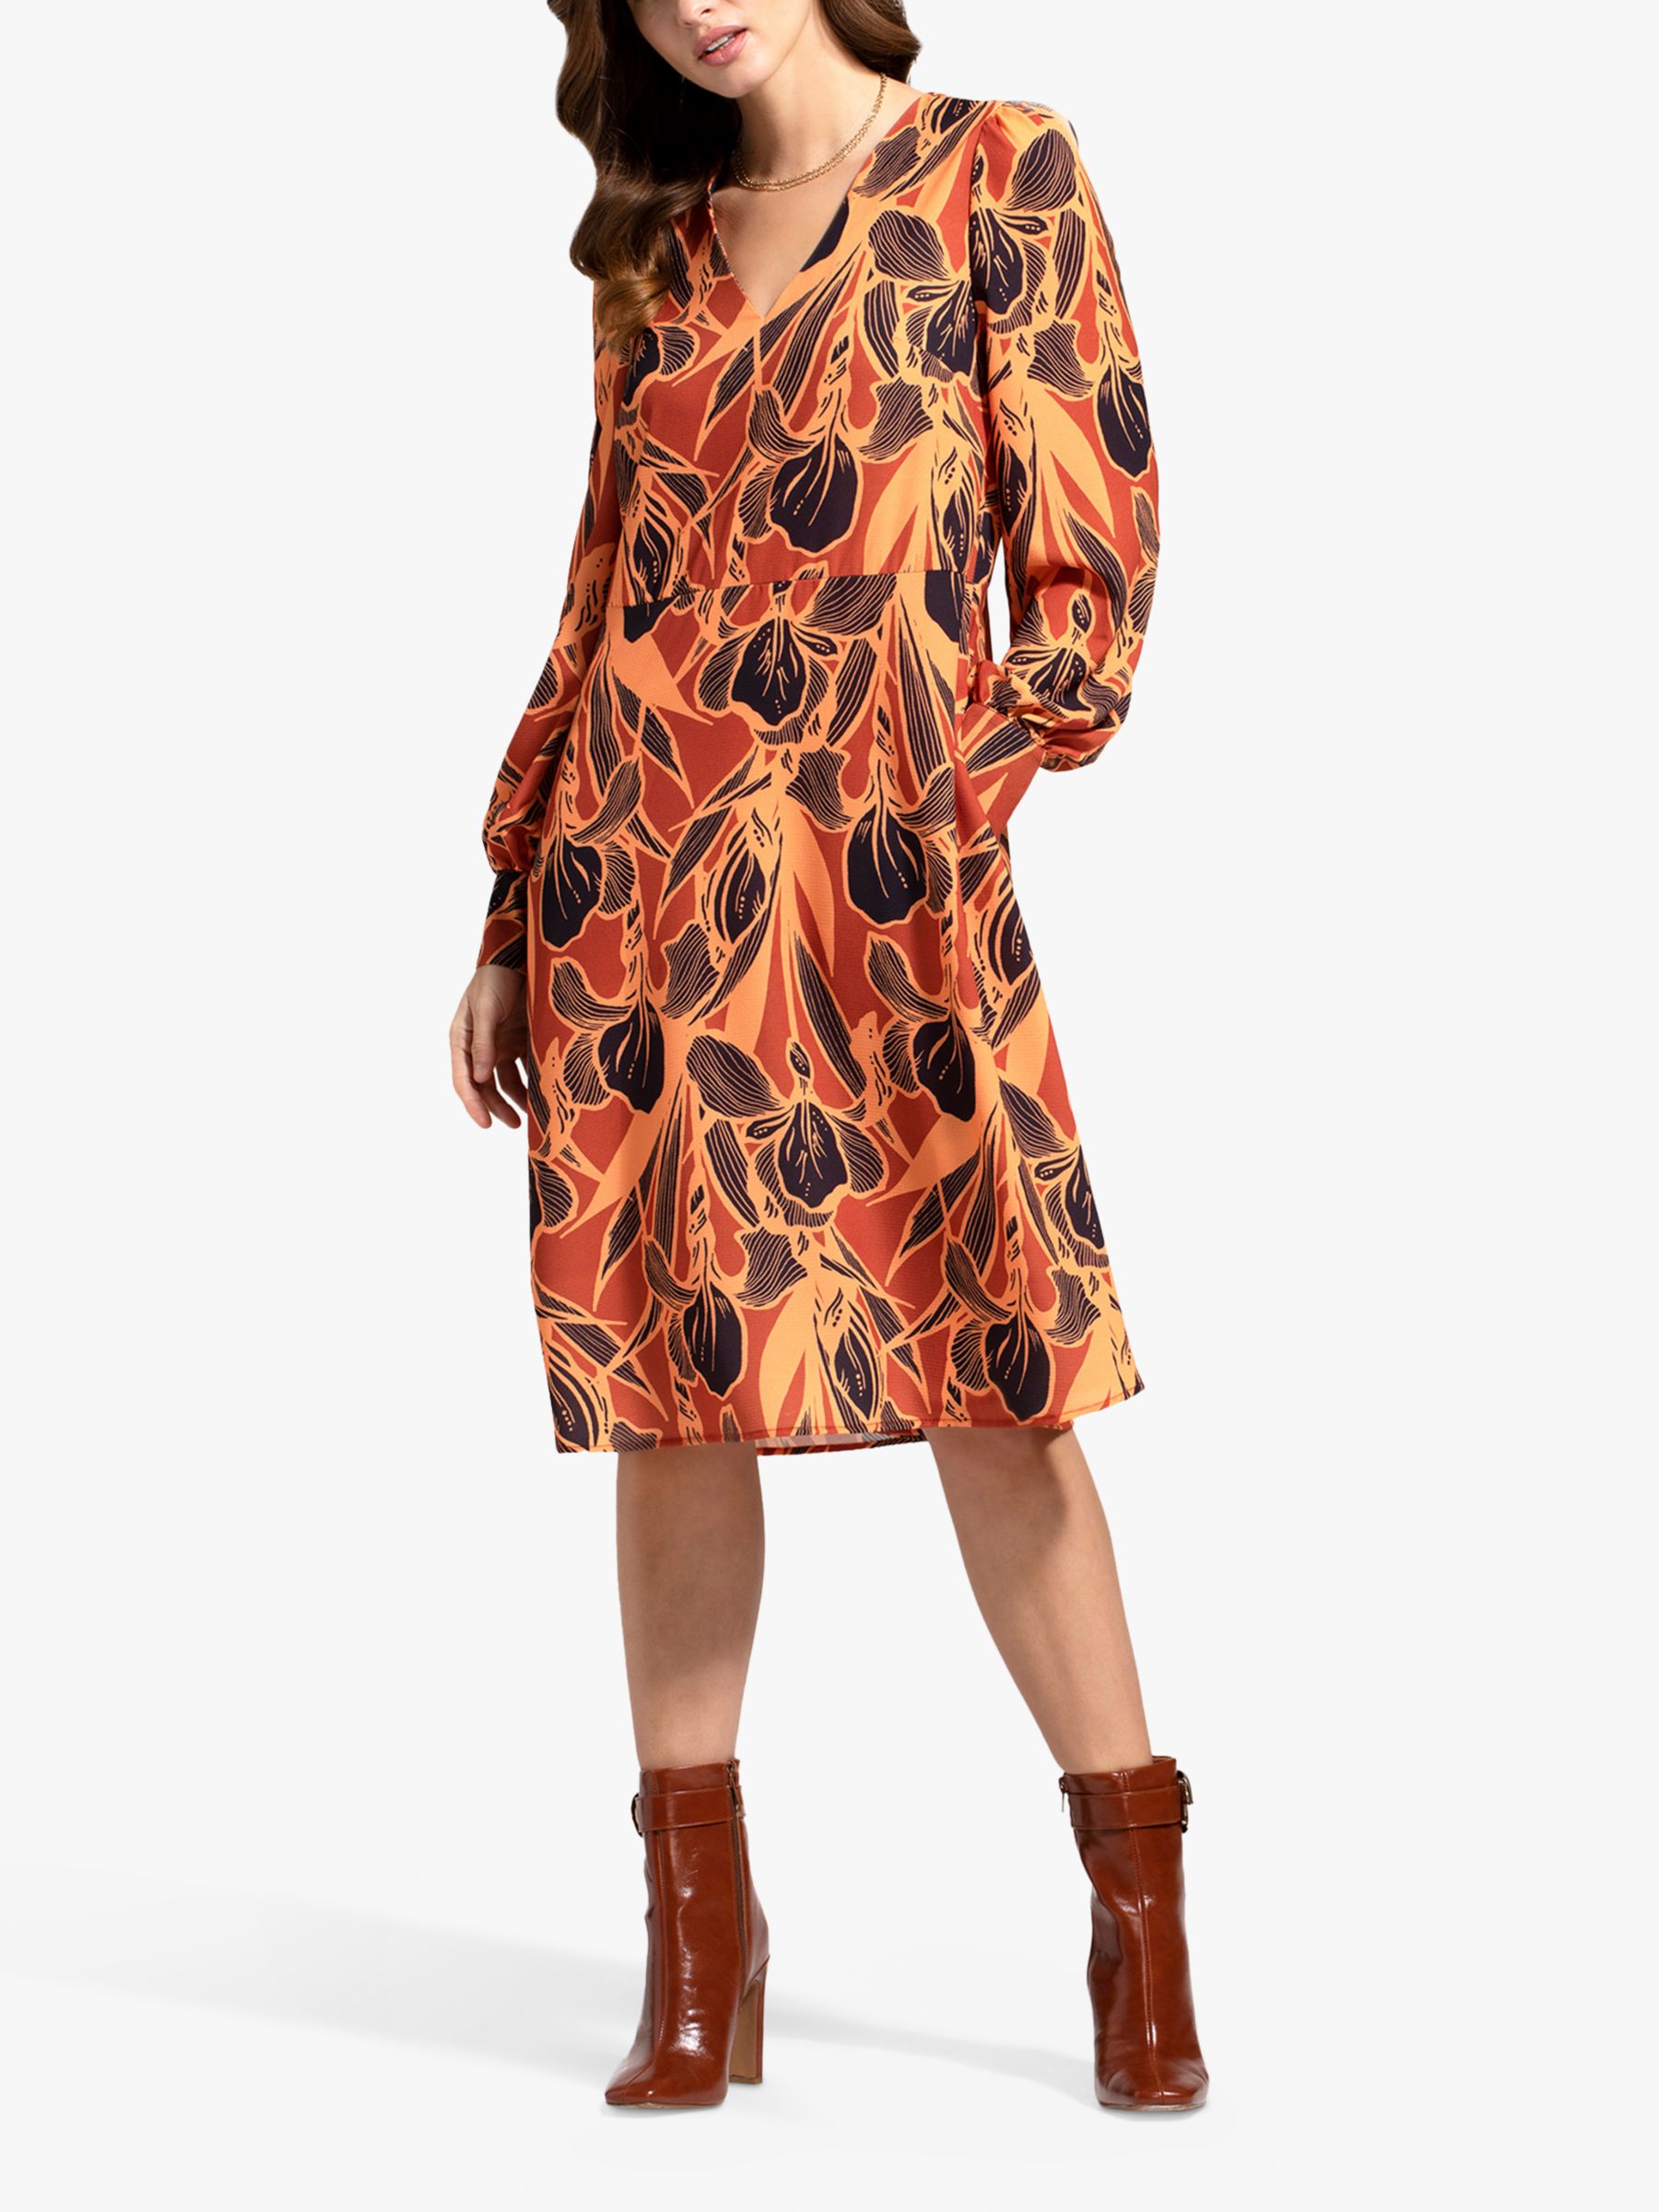 HotSquash Floral Chiffon Dress, Brown/Multi